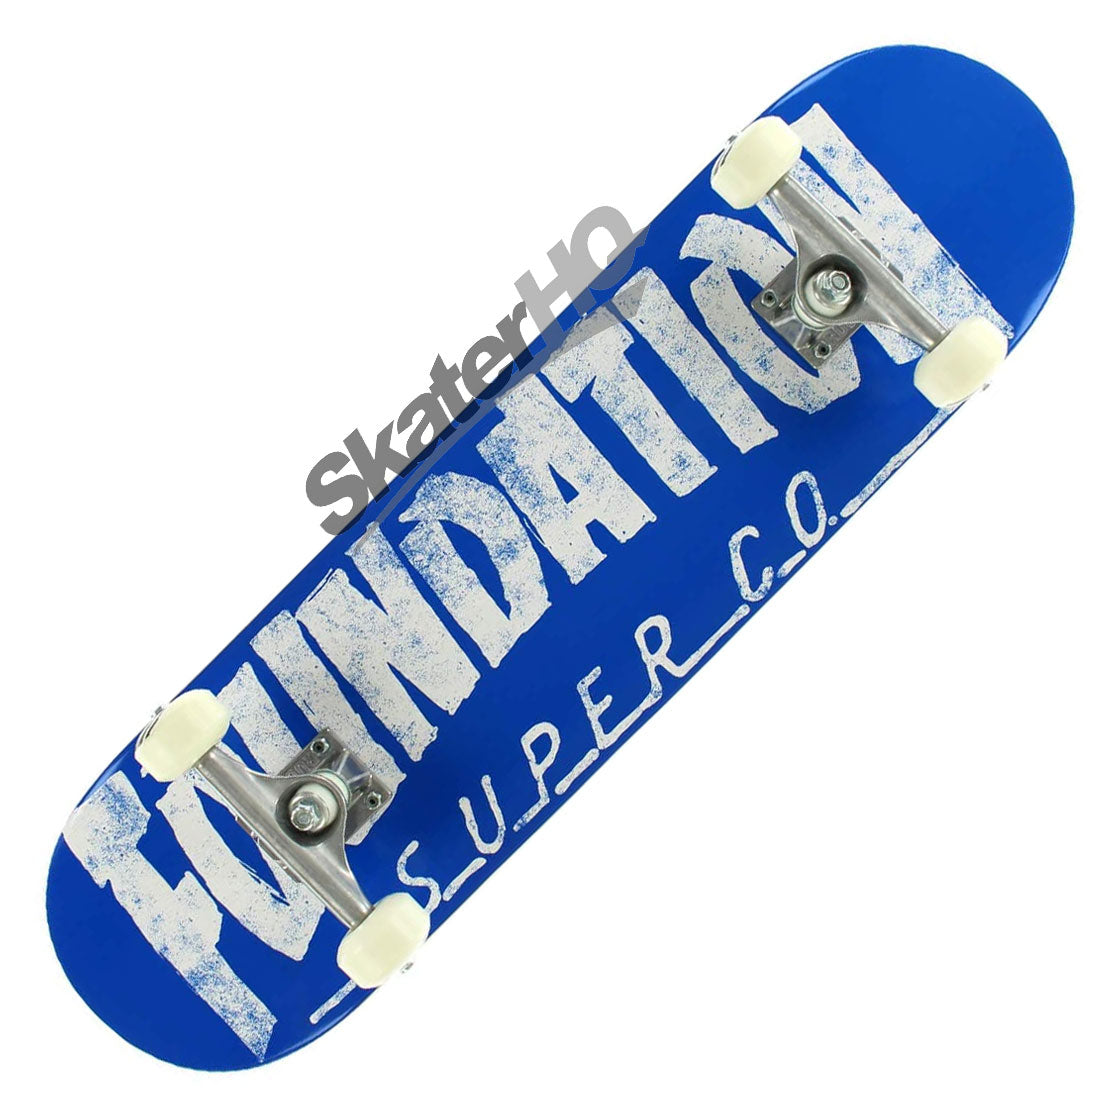 Foundation Thrasher 8.0 Complete - Blue Skateboard Completes Modern Street